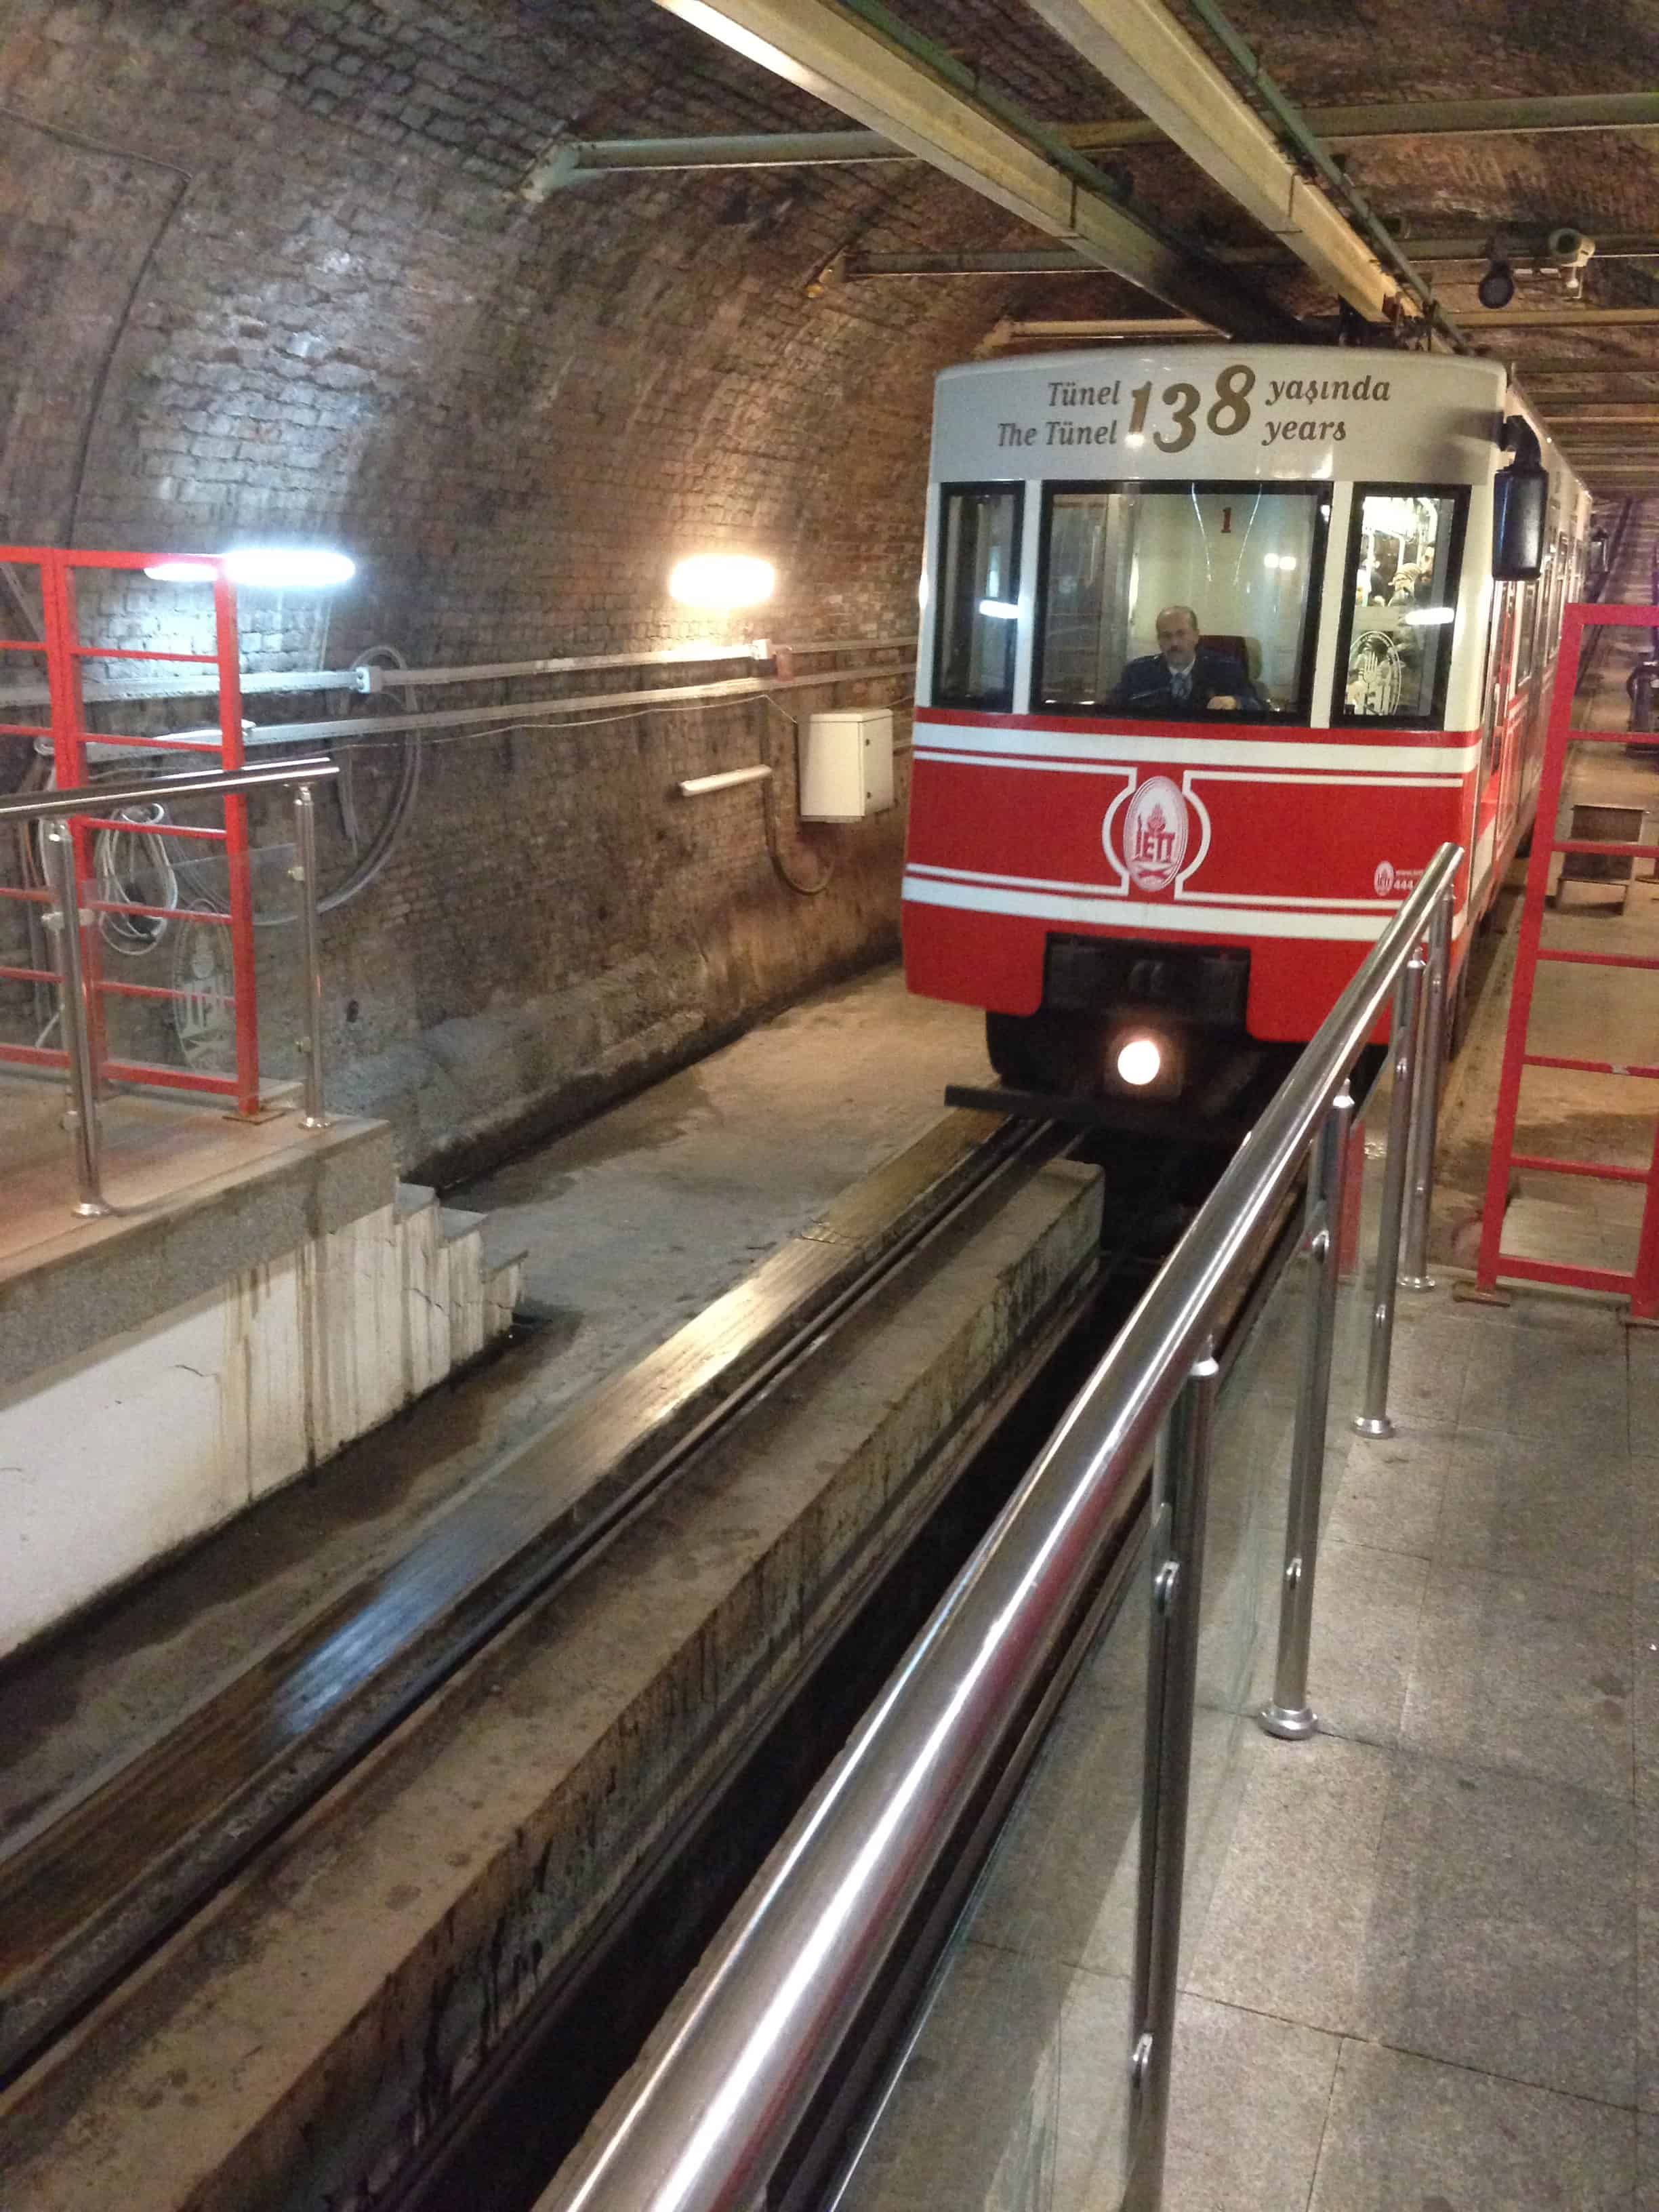 Karaköy Tünel station in Istanbul, Turkey